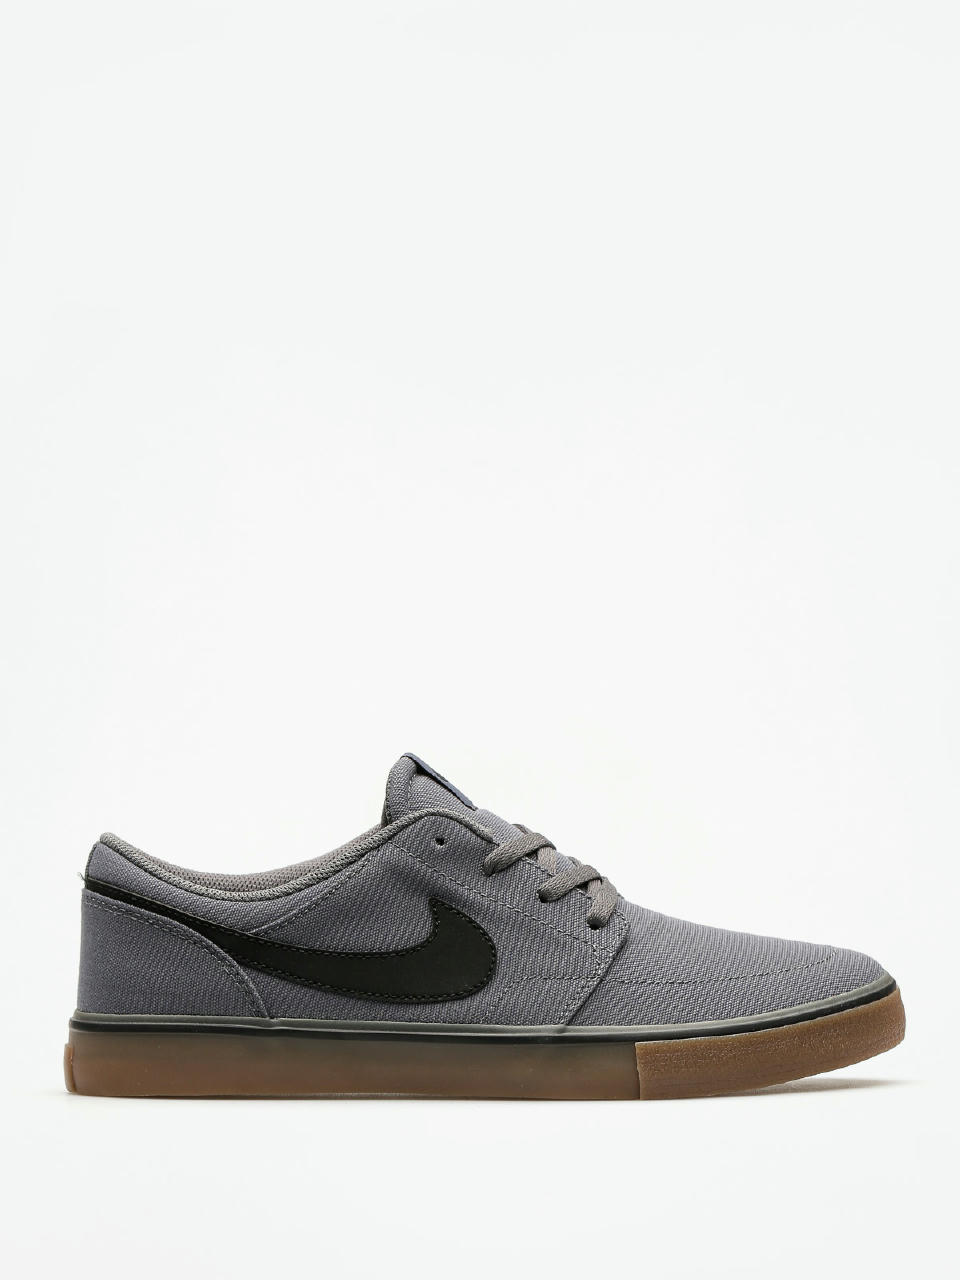 Alegaciones Moderar Embajada Nike SB Shoes Sb Solarsoft Portmore II (dark grey/black gum light brown)